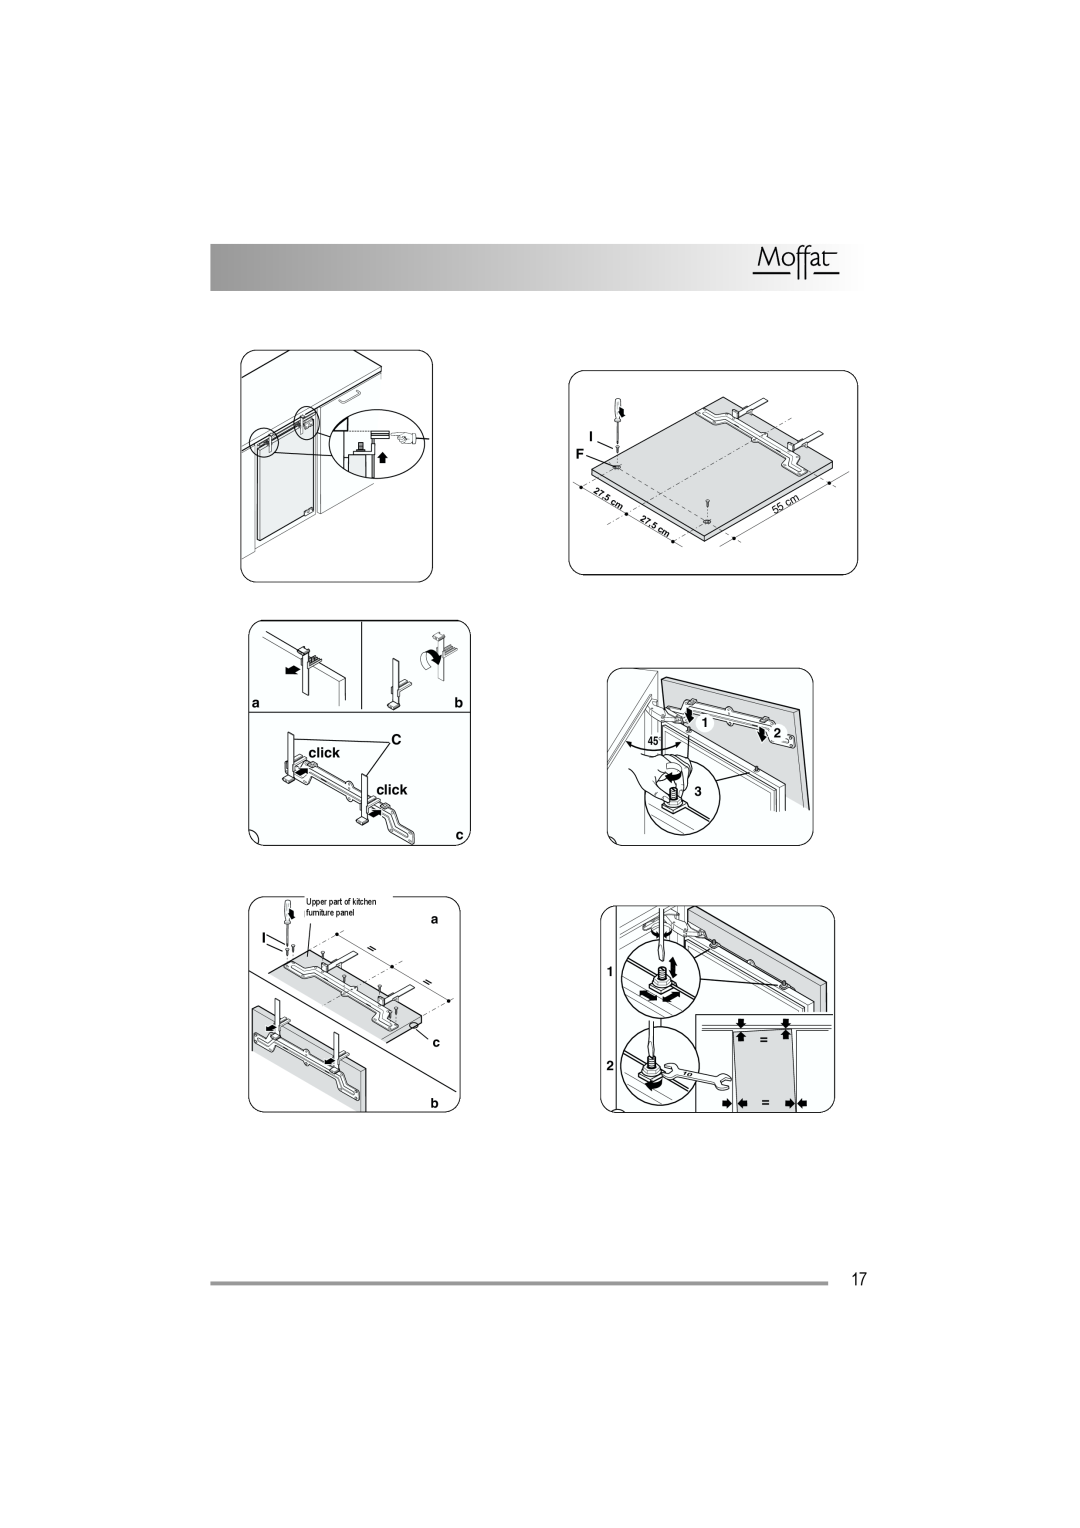 Moffat MUL 514 user manual click, c 2 b, Upper part of kitchen, furniture panel, 27,5 